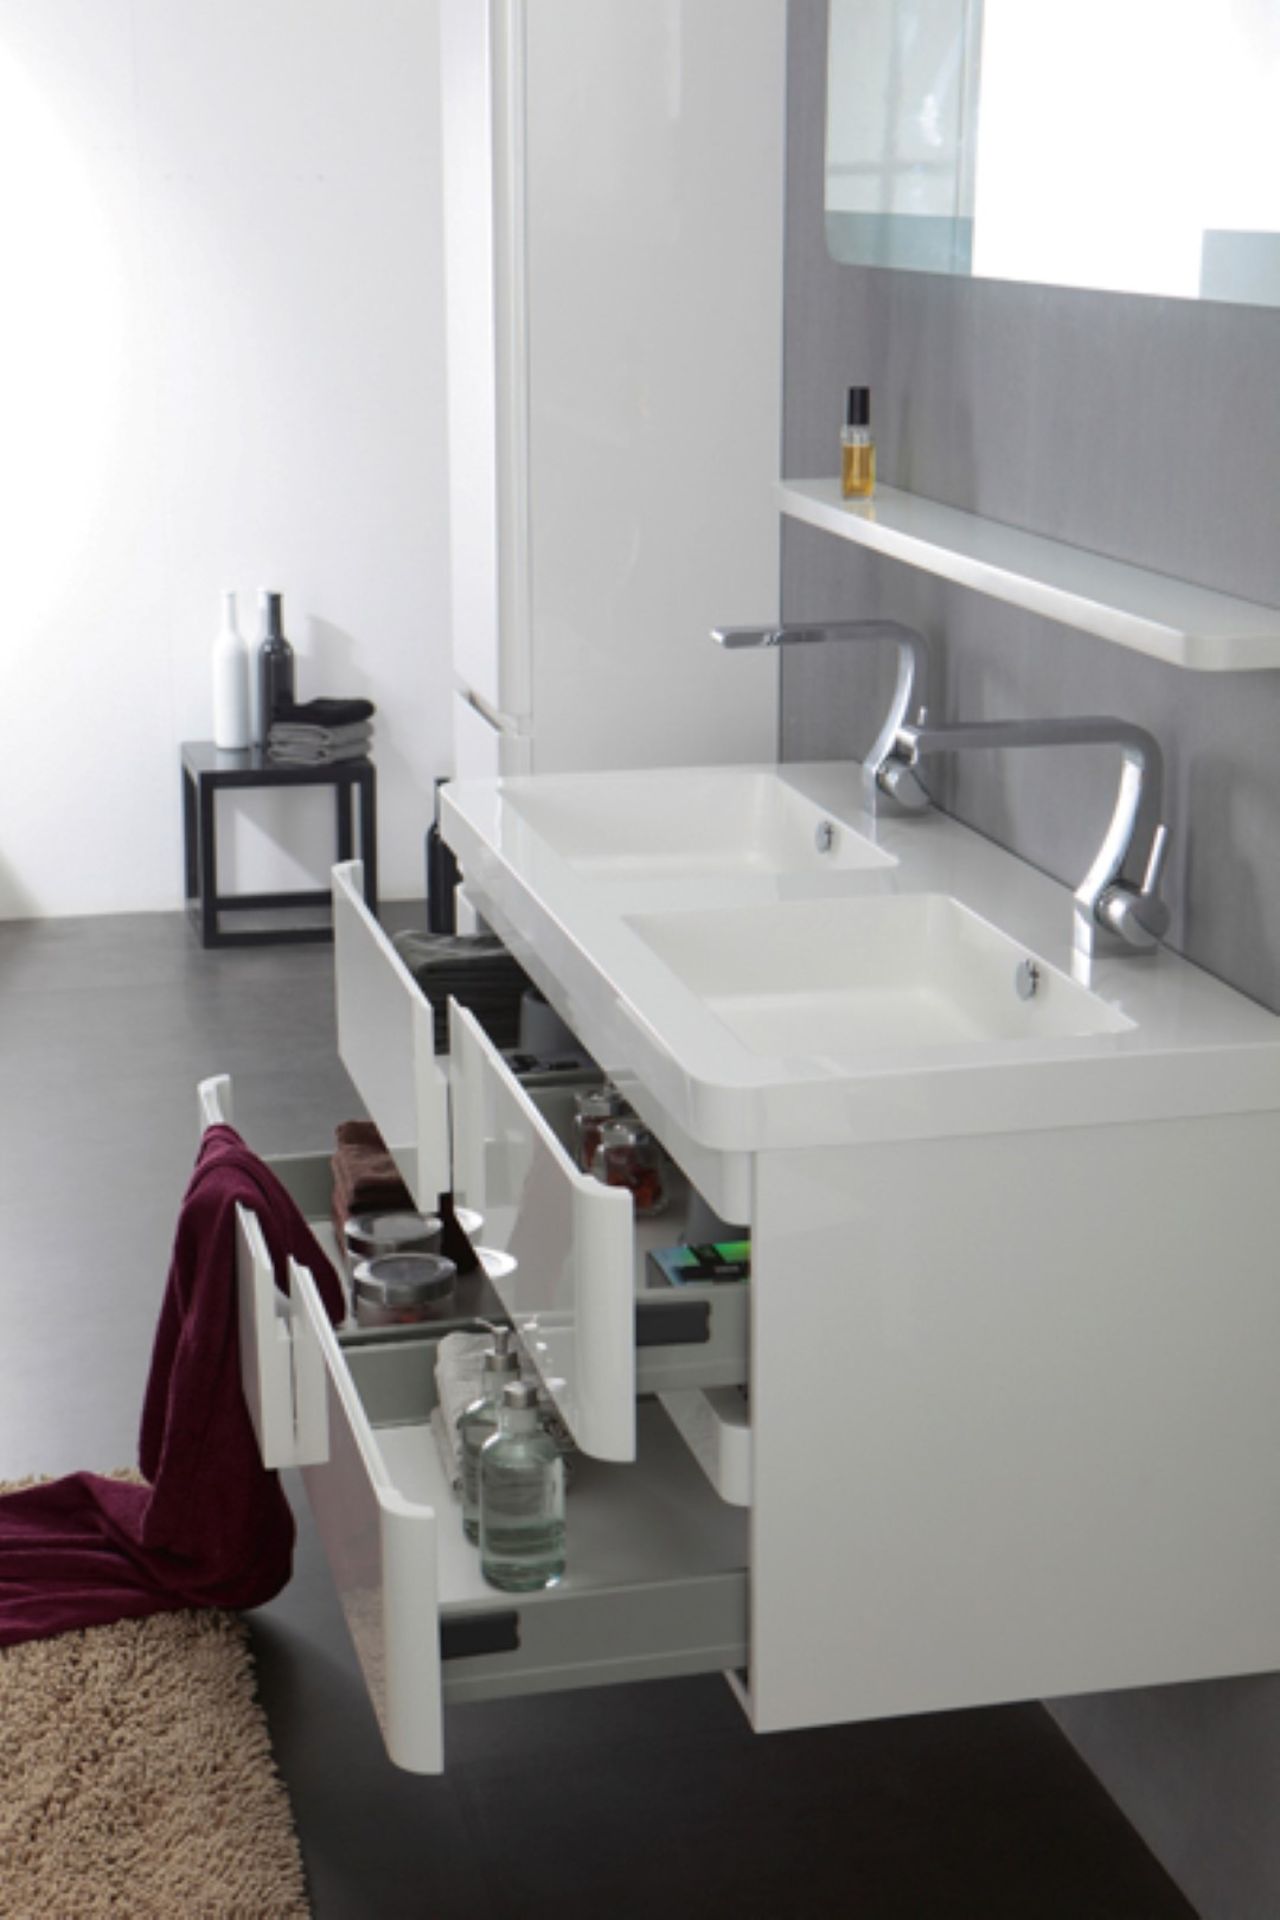 1 x Austin Bathrooms URBAN 120 Wall Mounted Bathroom Vanity Unit With MarbleTECH Twin Sink Basin - Image 6 of 6